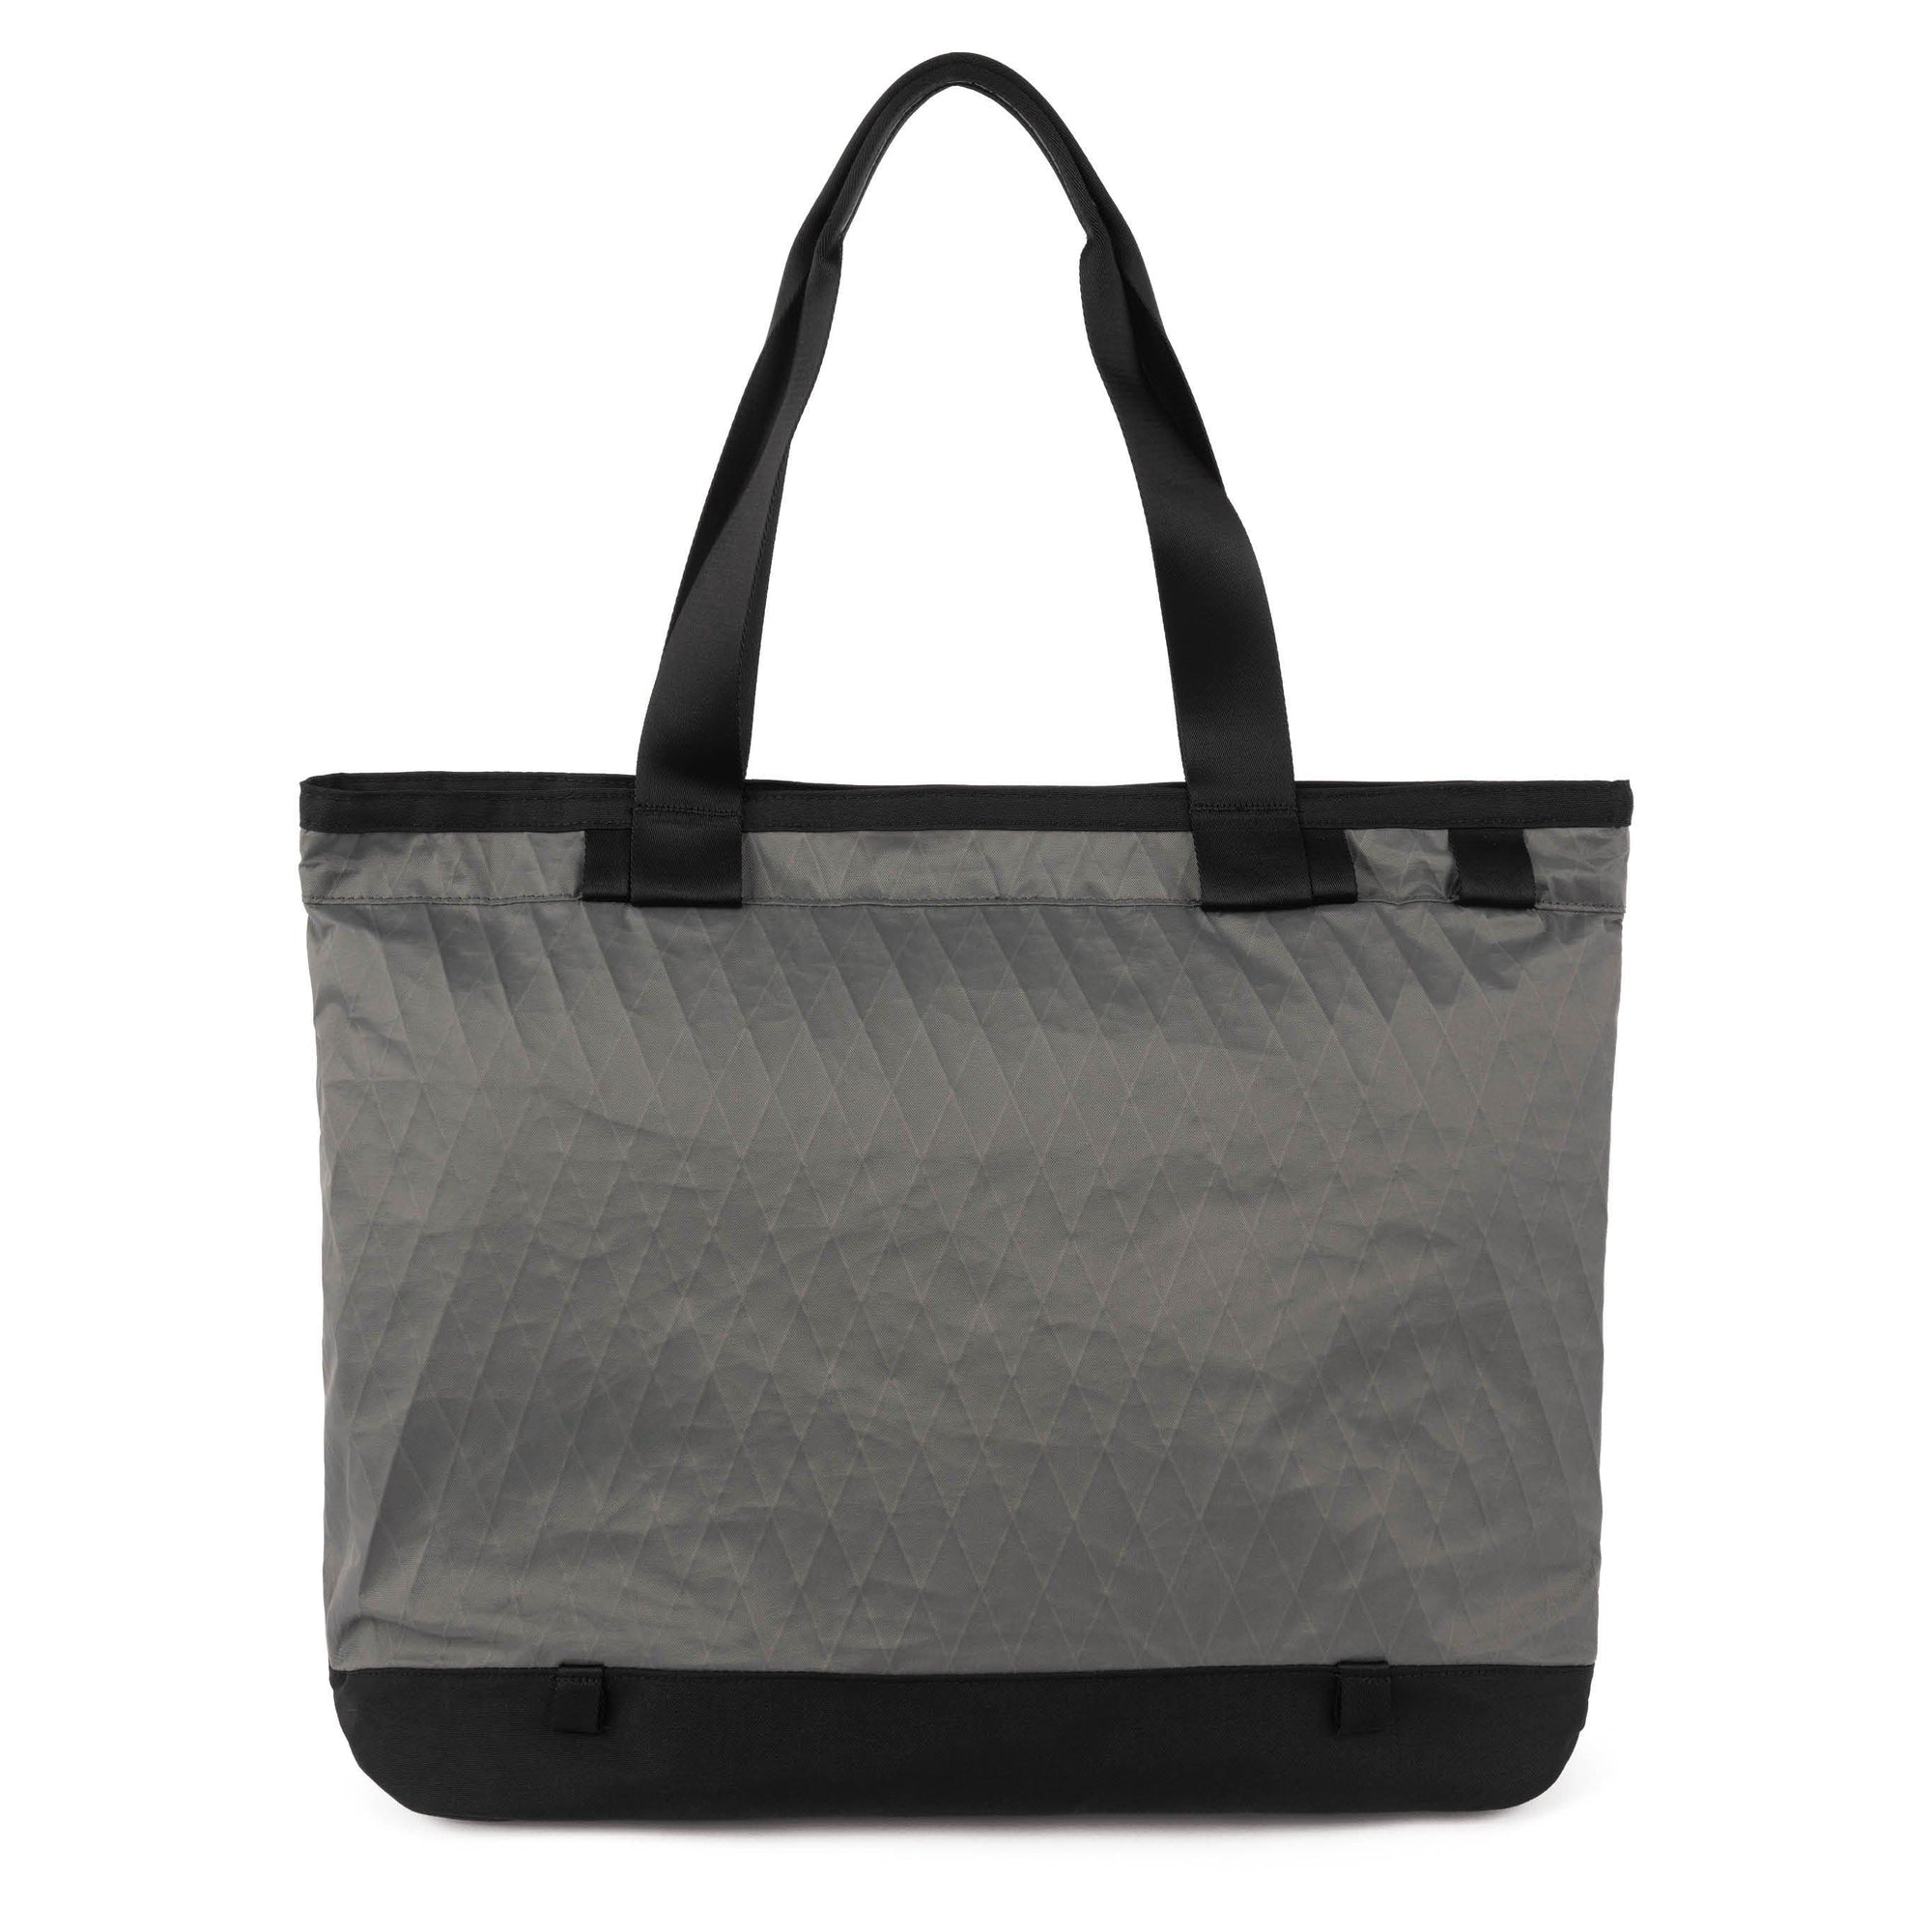 Purse Organizer Insert for Handbag Universal Style Perfect for LV